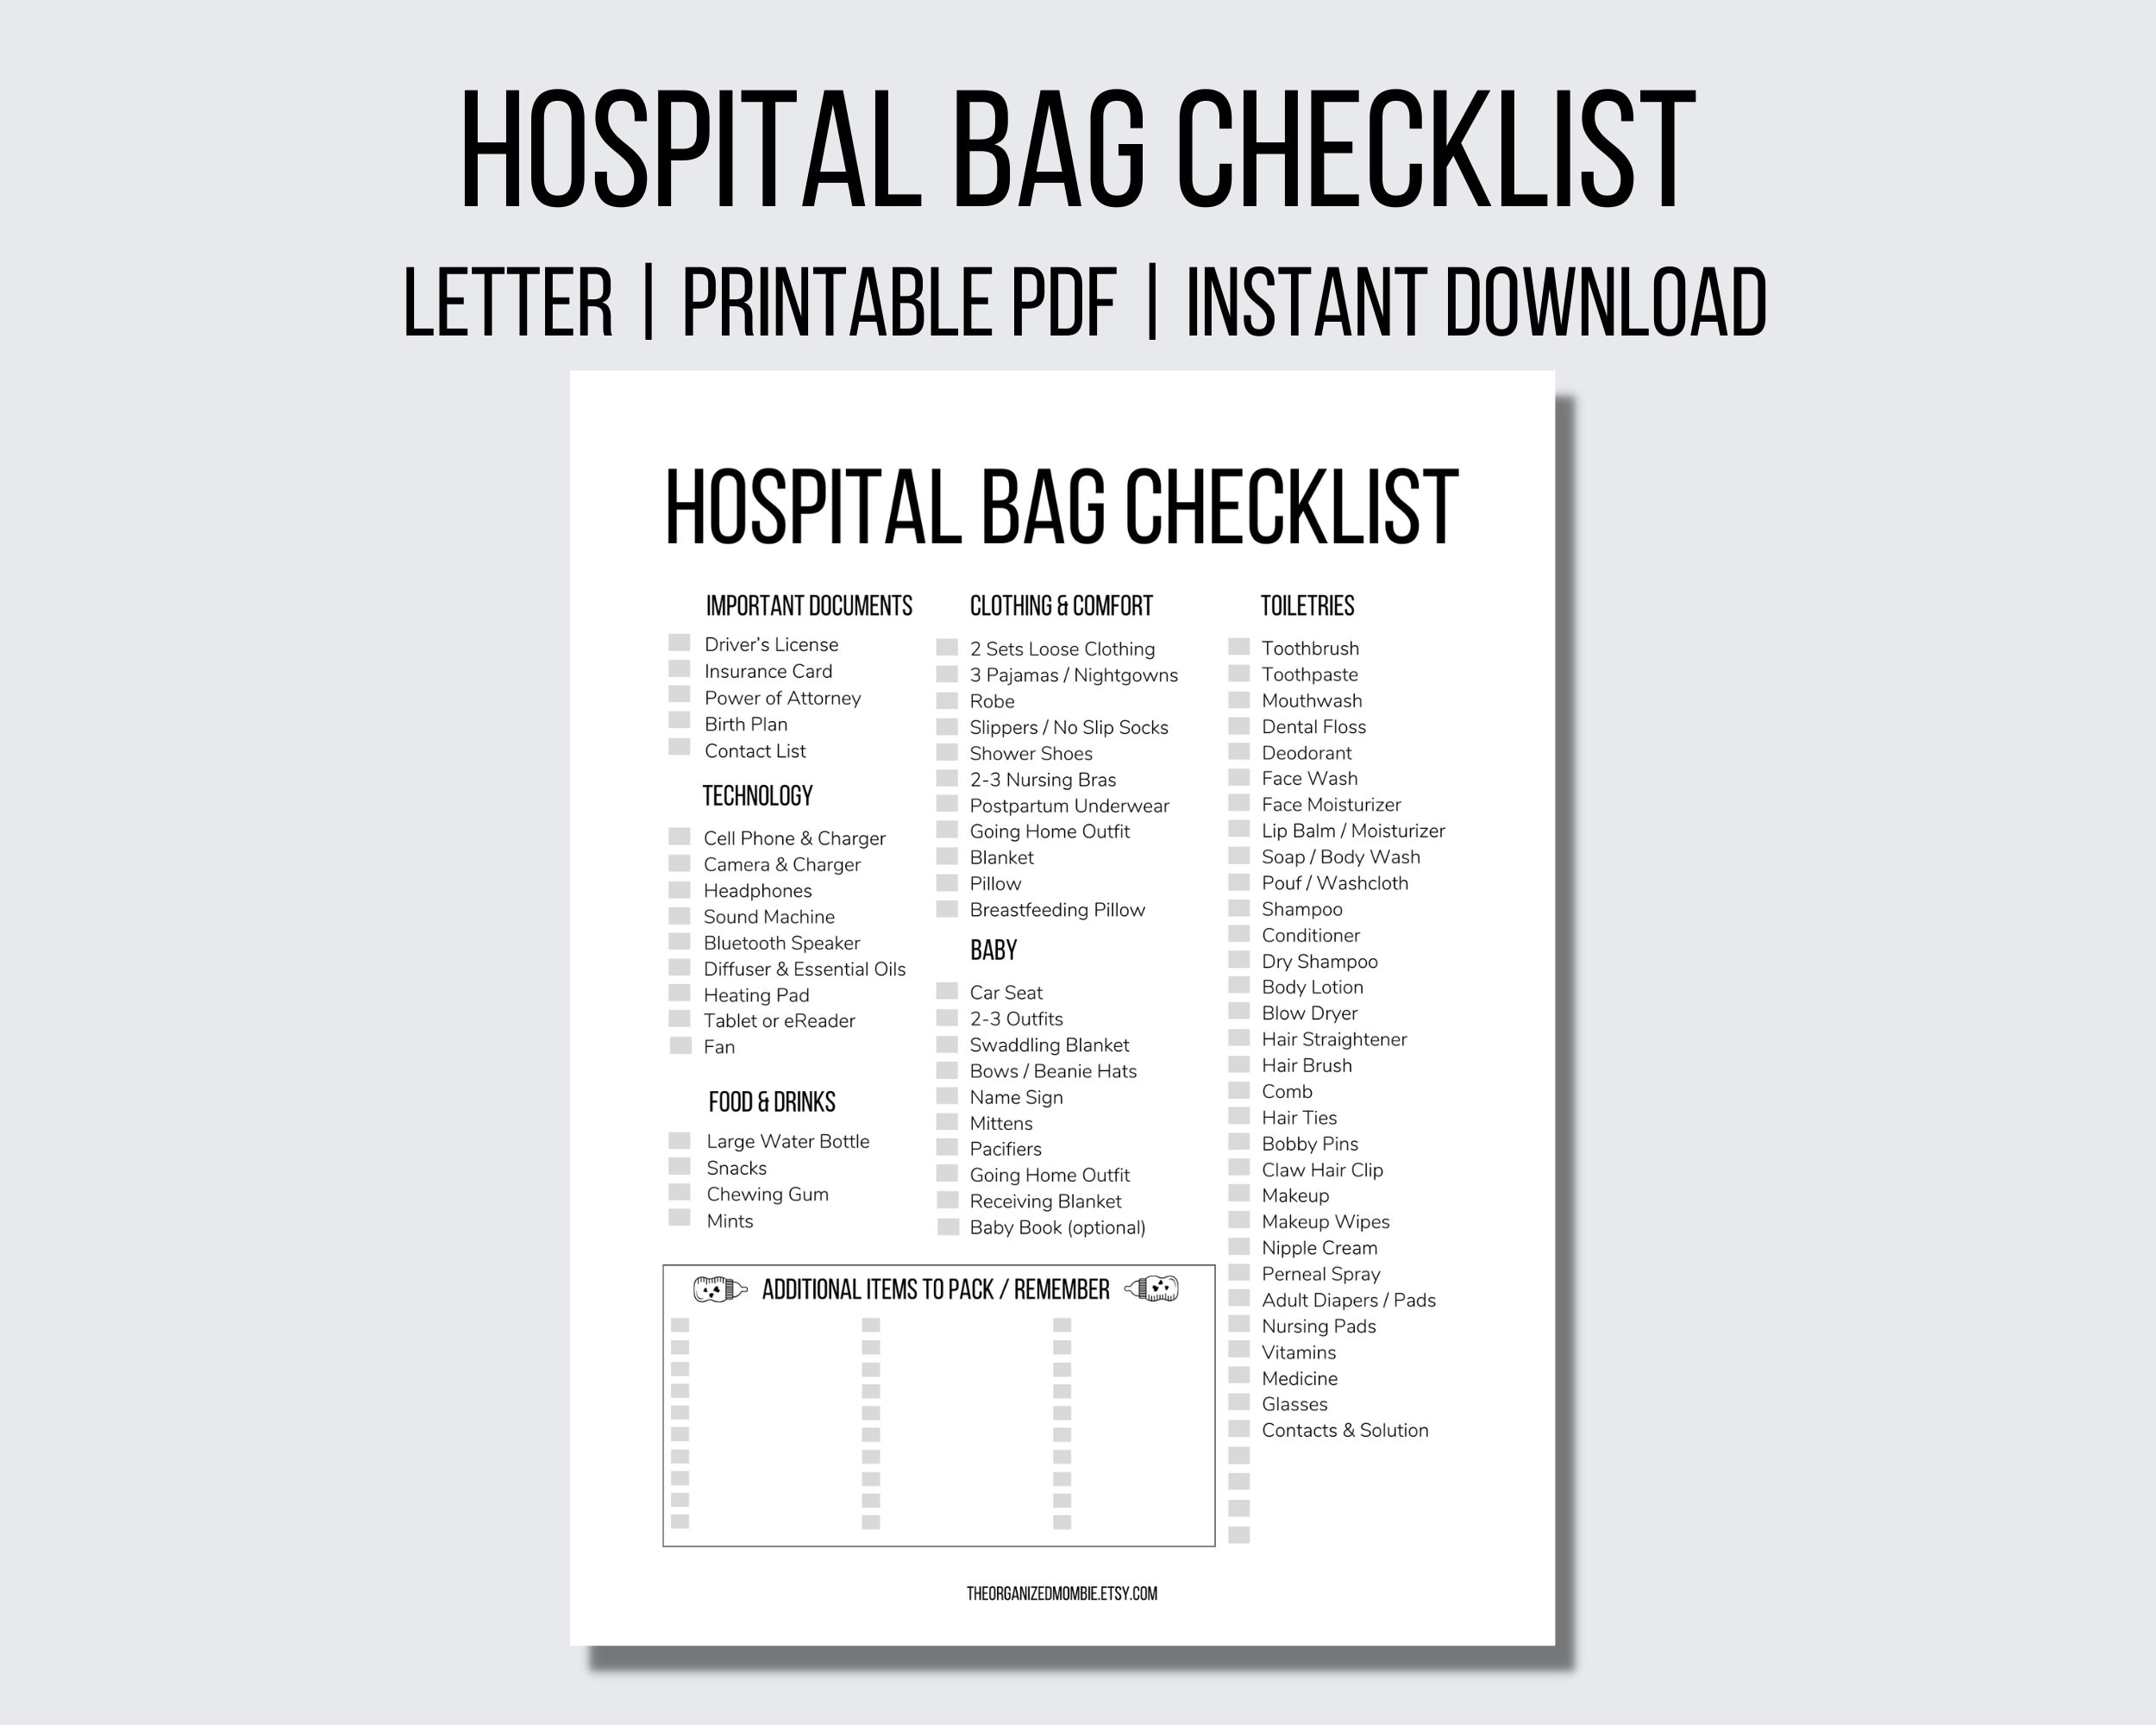 Hospital Birth Bag Checklist — Gather Birth Cooperative